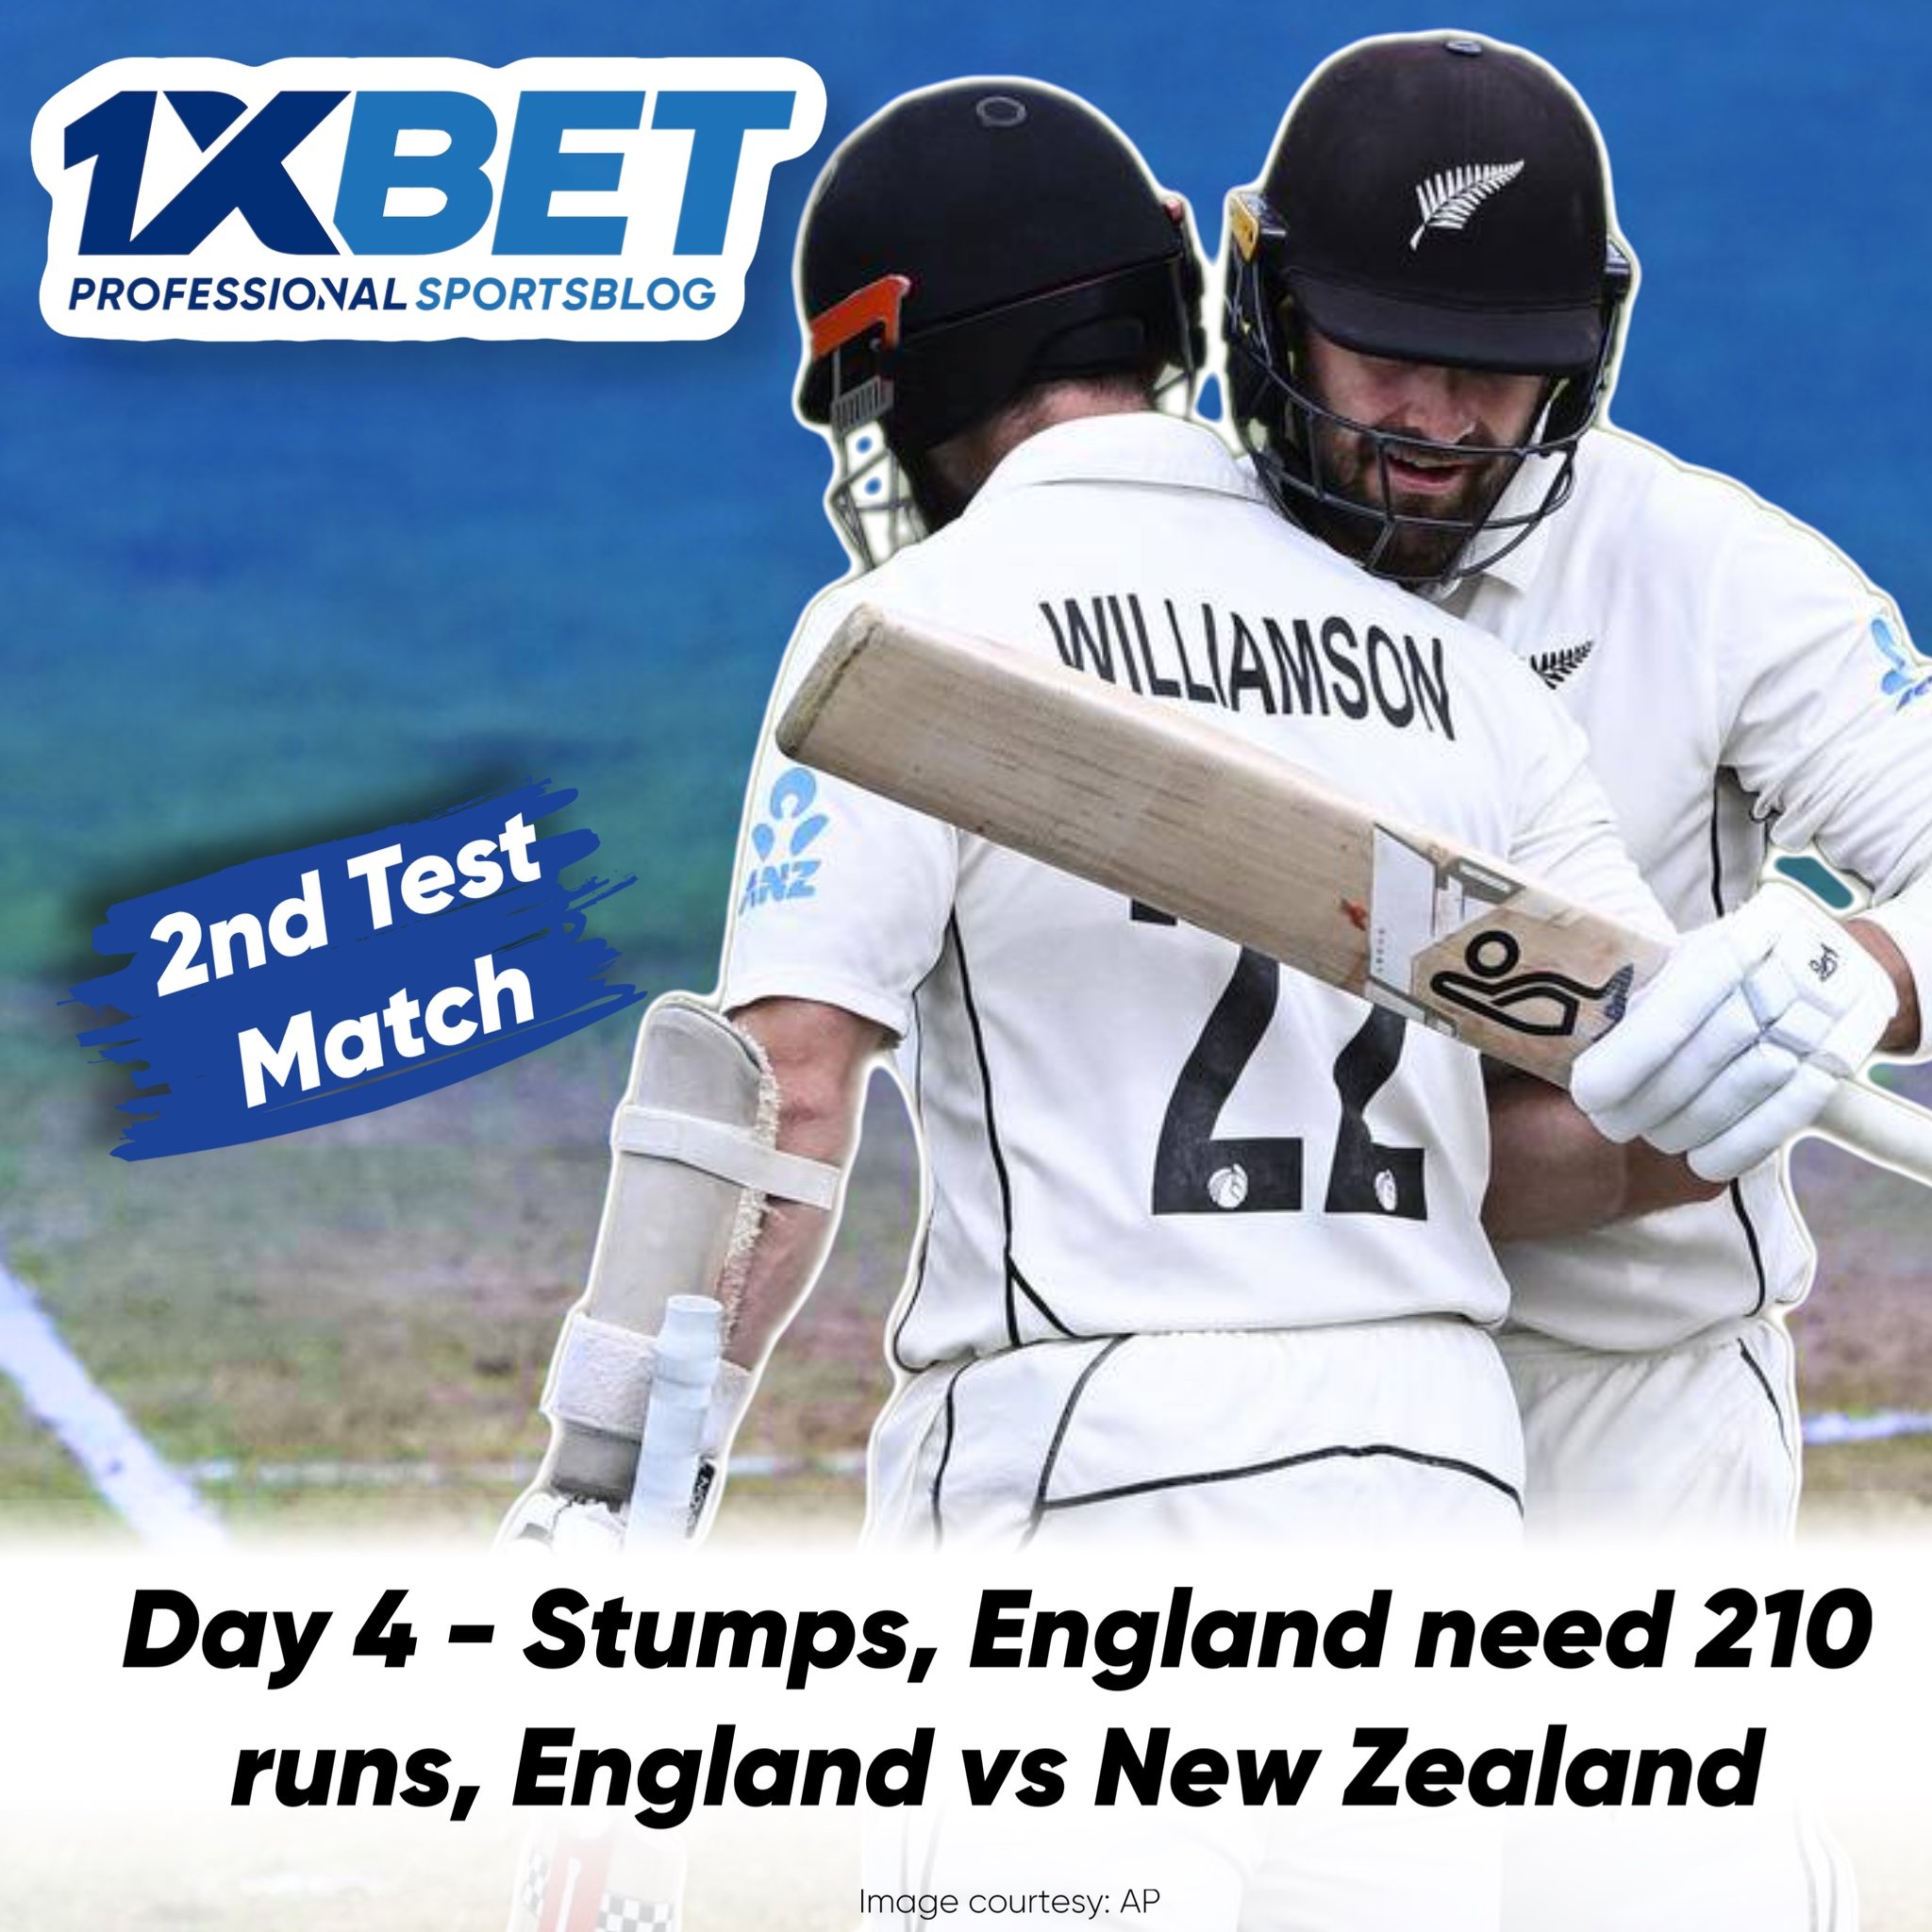 Day 4 - Stumps, England need 210 runs